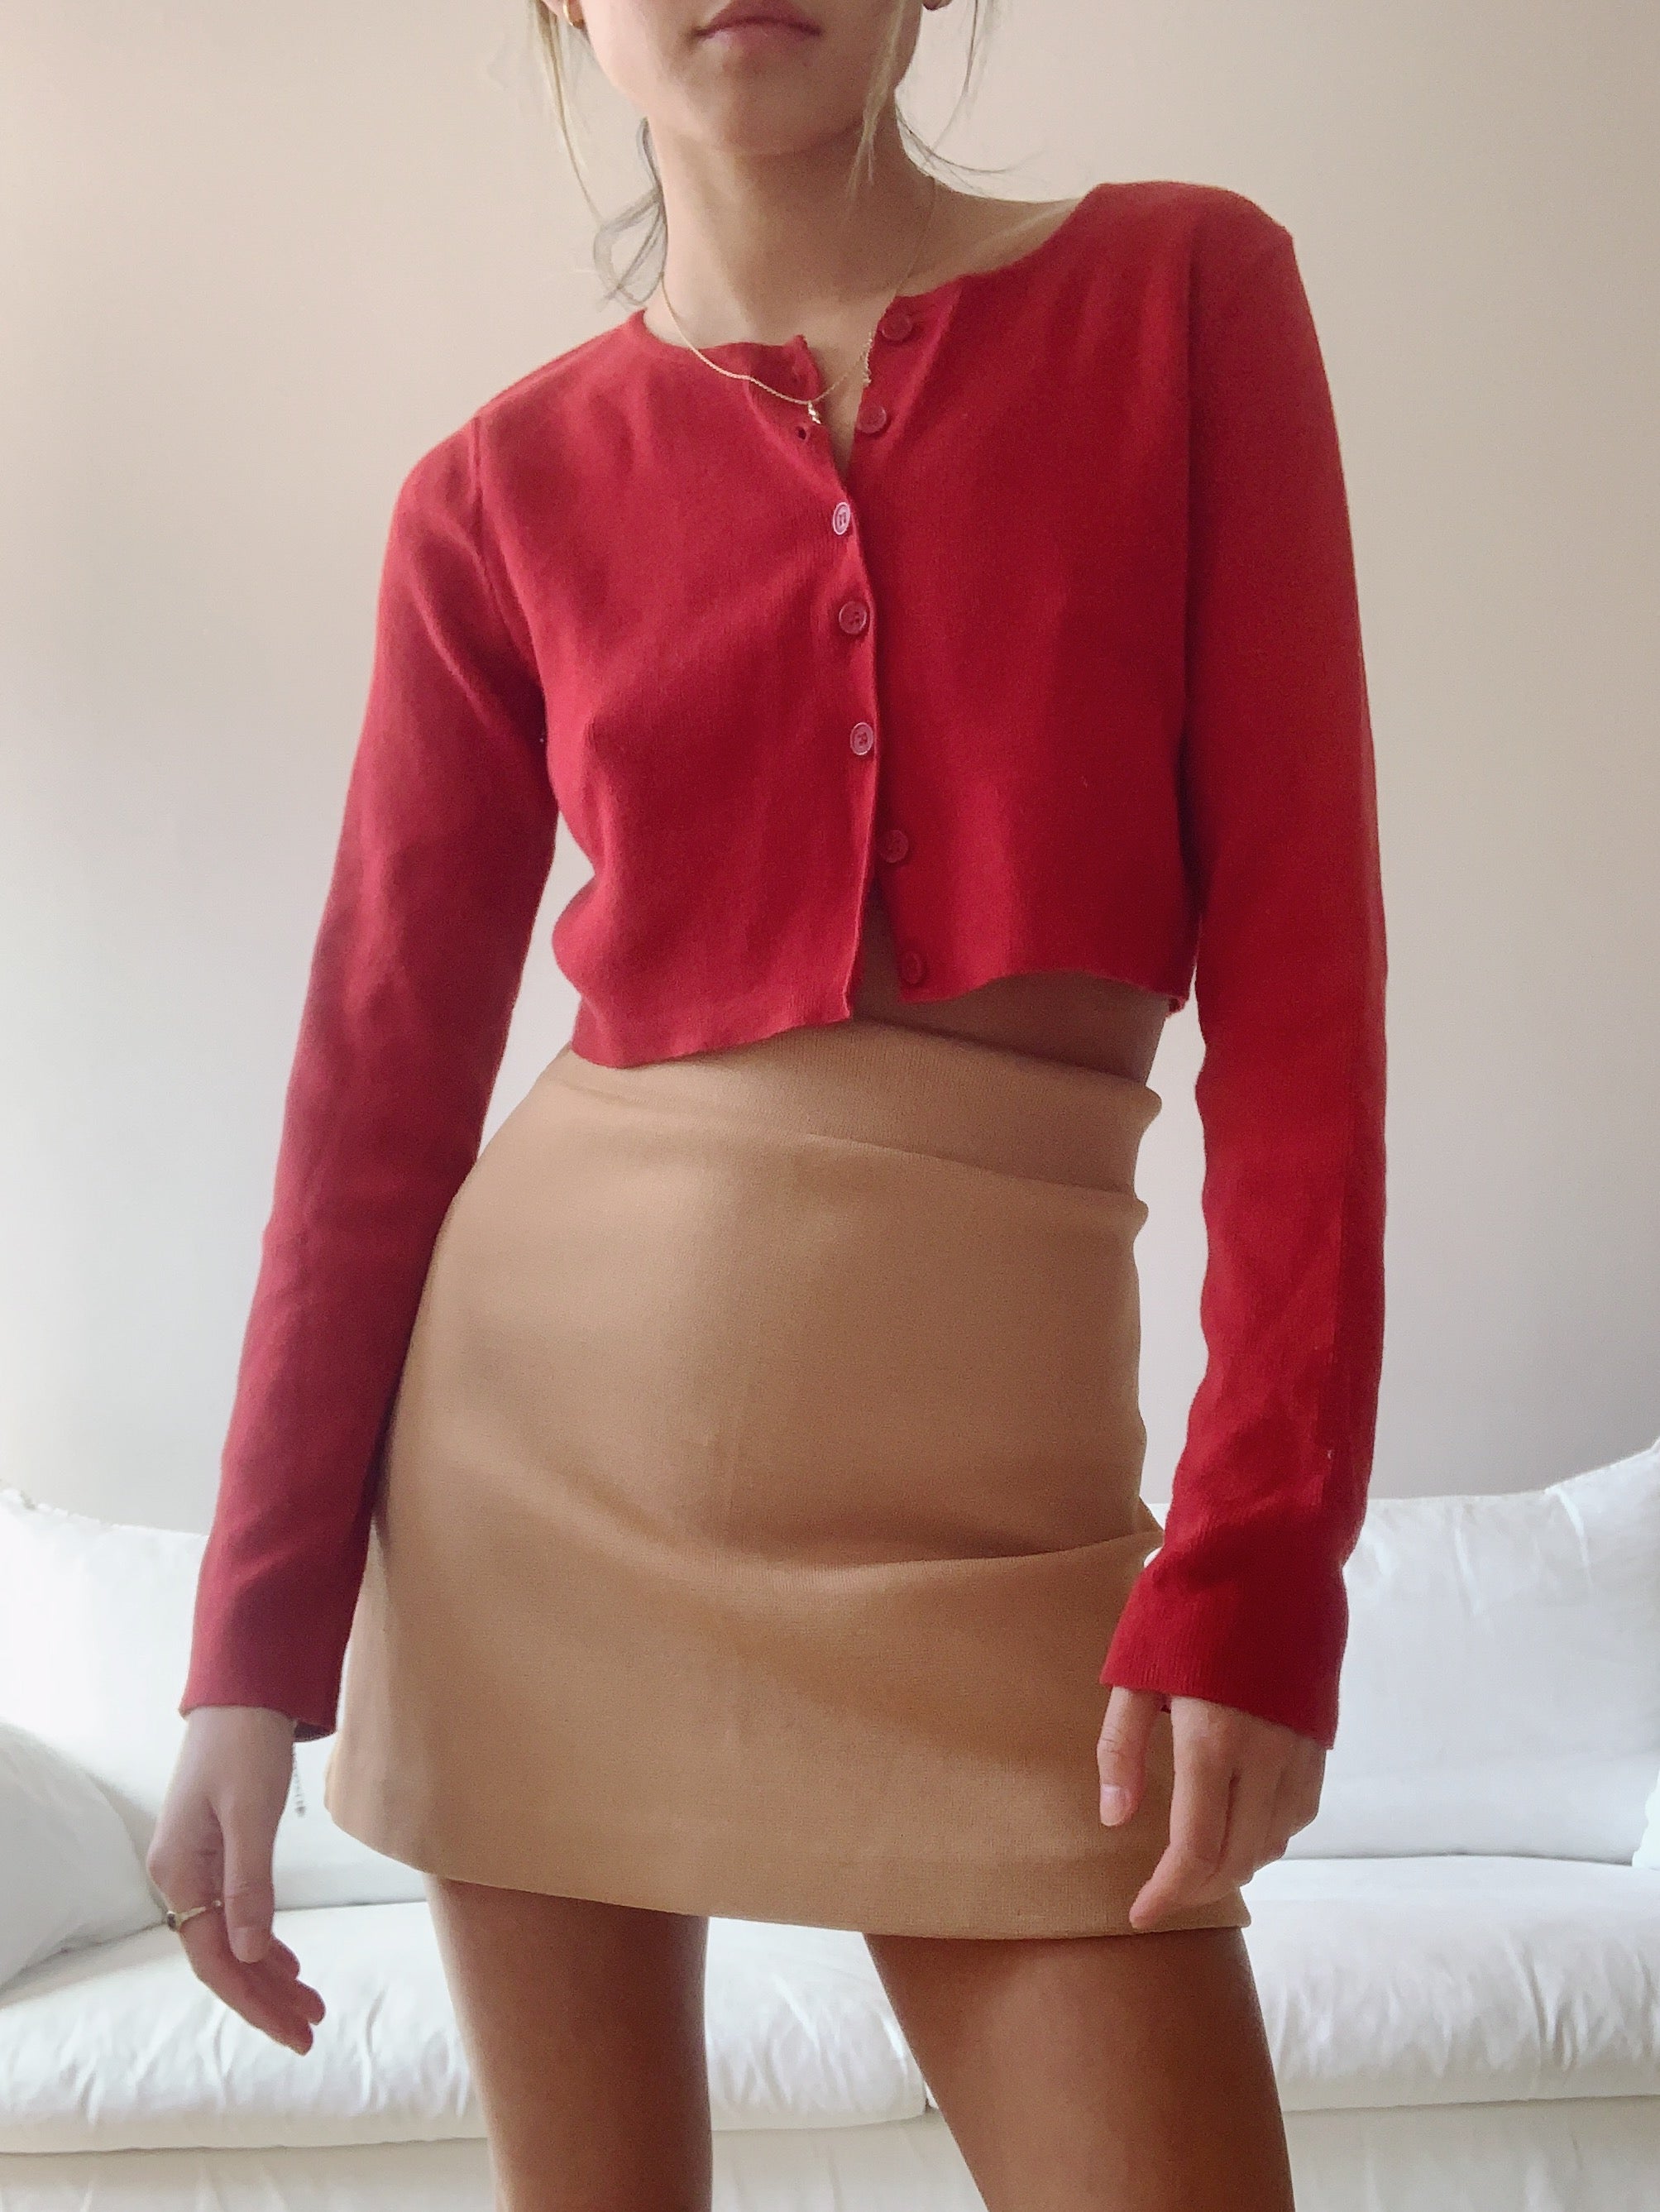 Brandy Melville - Red Brandy Melville Shorts on Designer Wardrobe